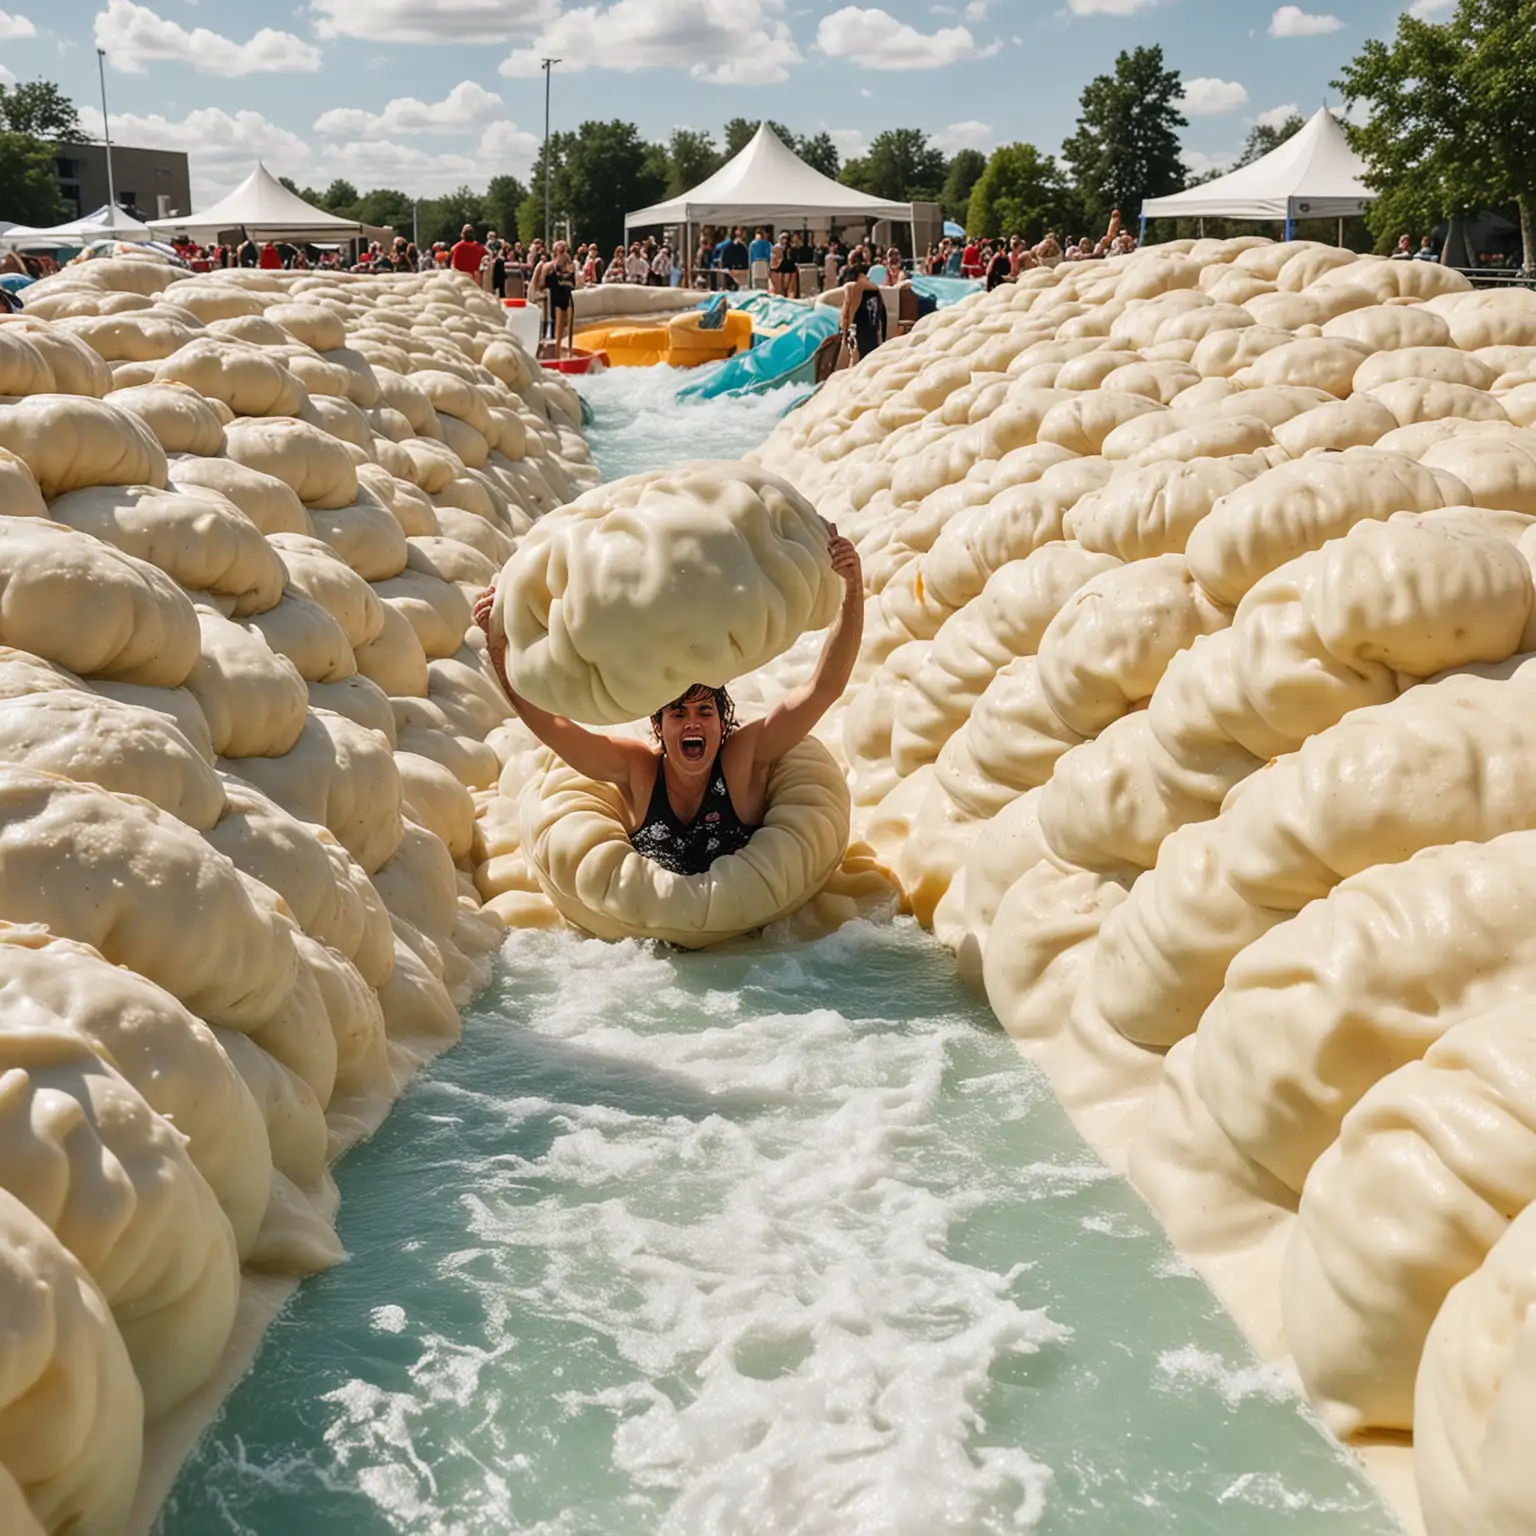 Exciting Water Slide Adventure on Oversized Dumplings